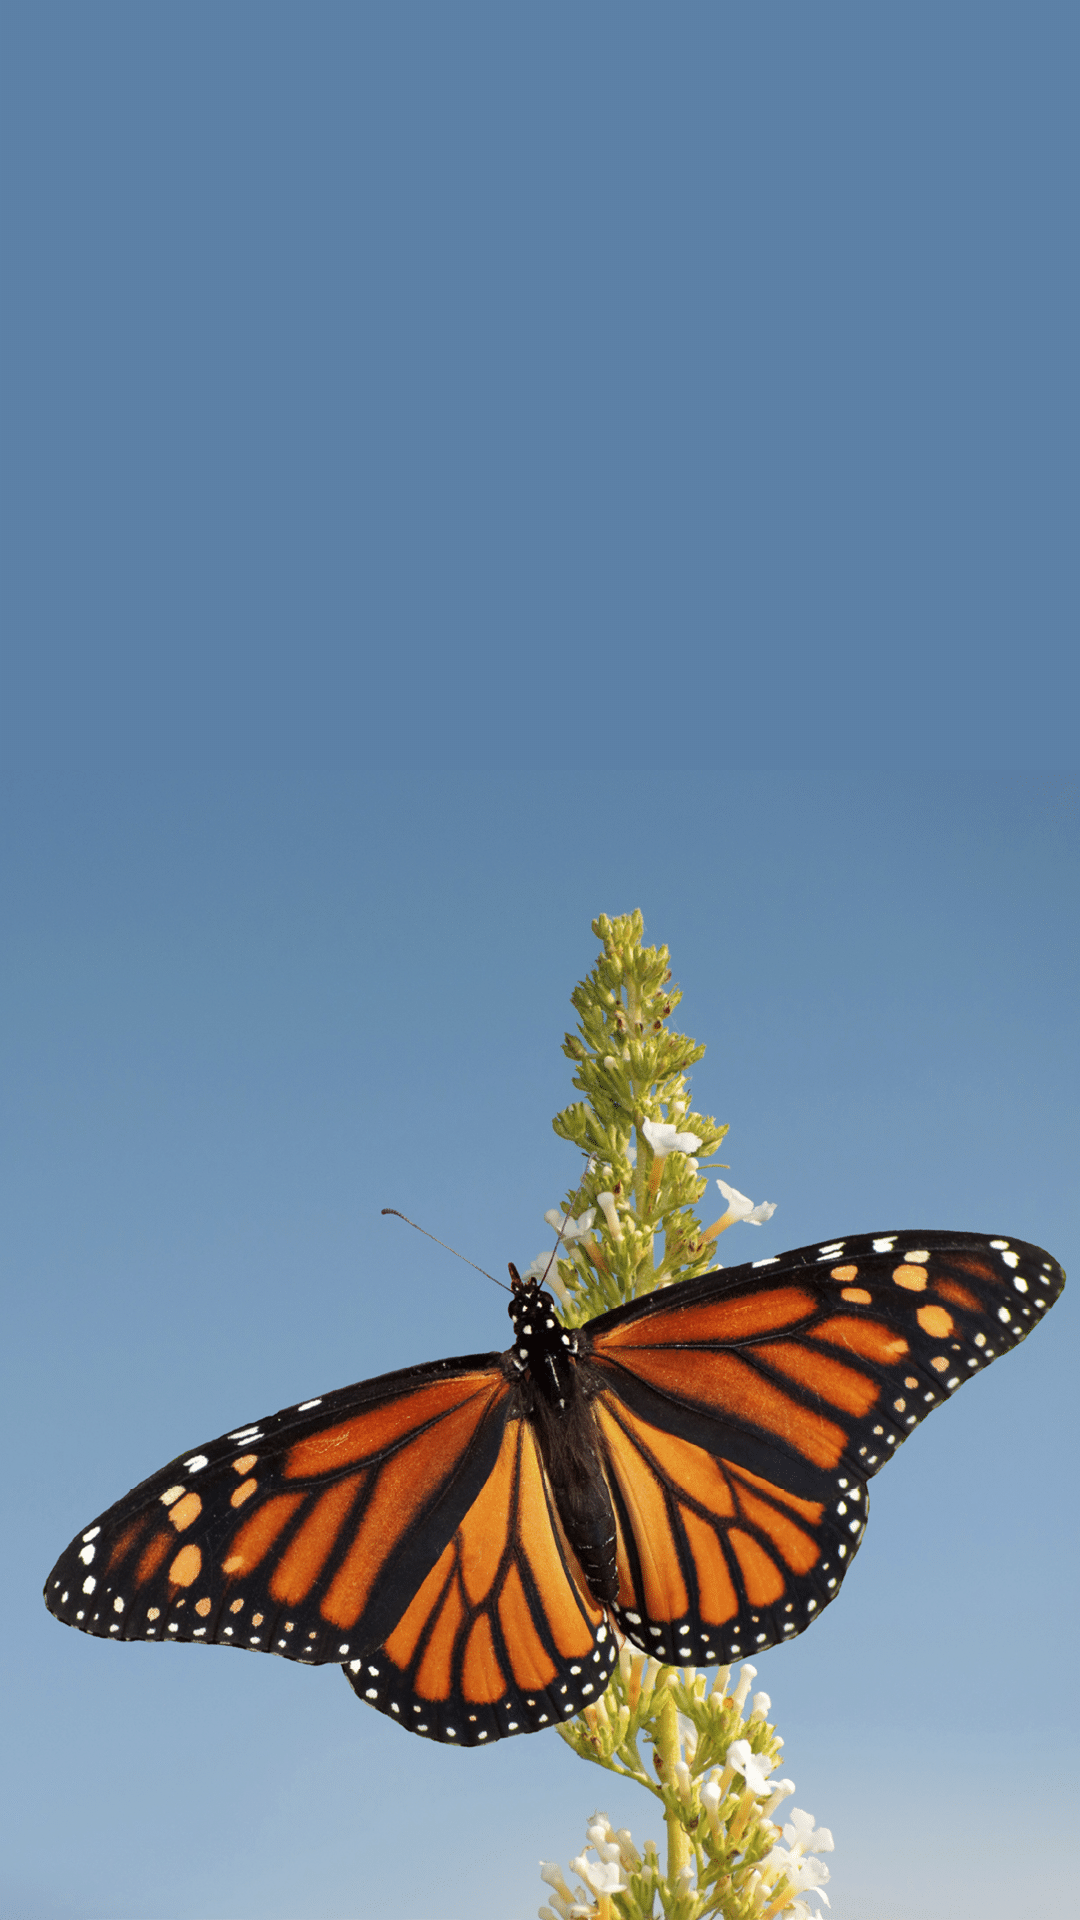 Female Monarch butterfly feeding on white flower cluster of a Butterfly bush  against blue sky